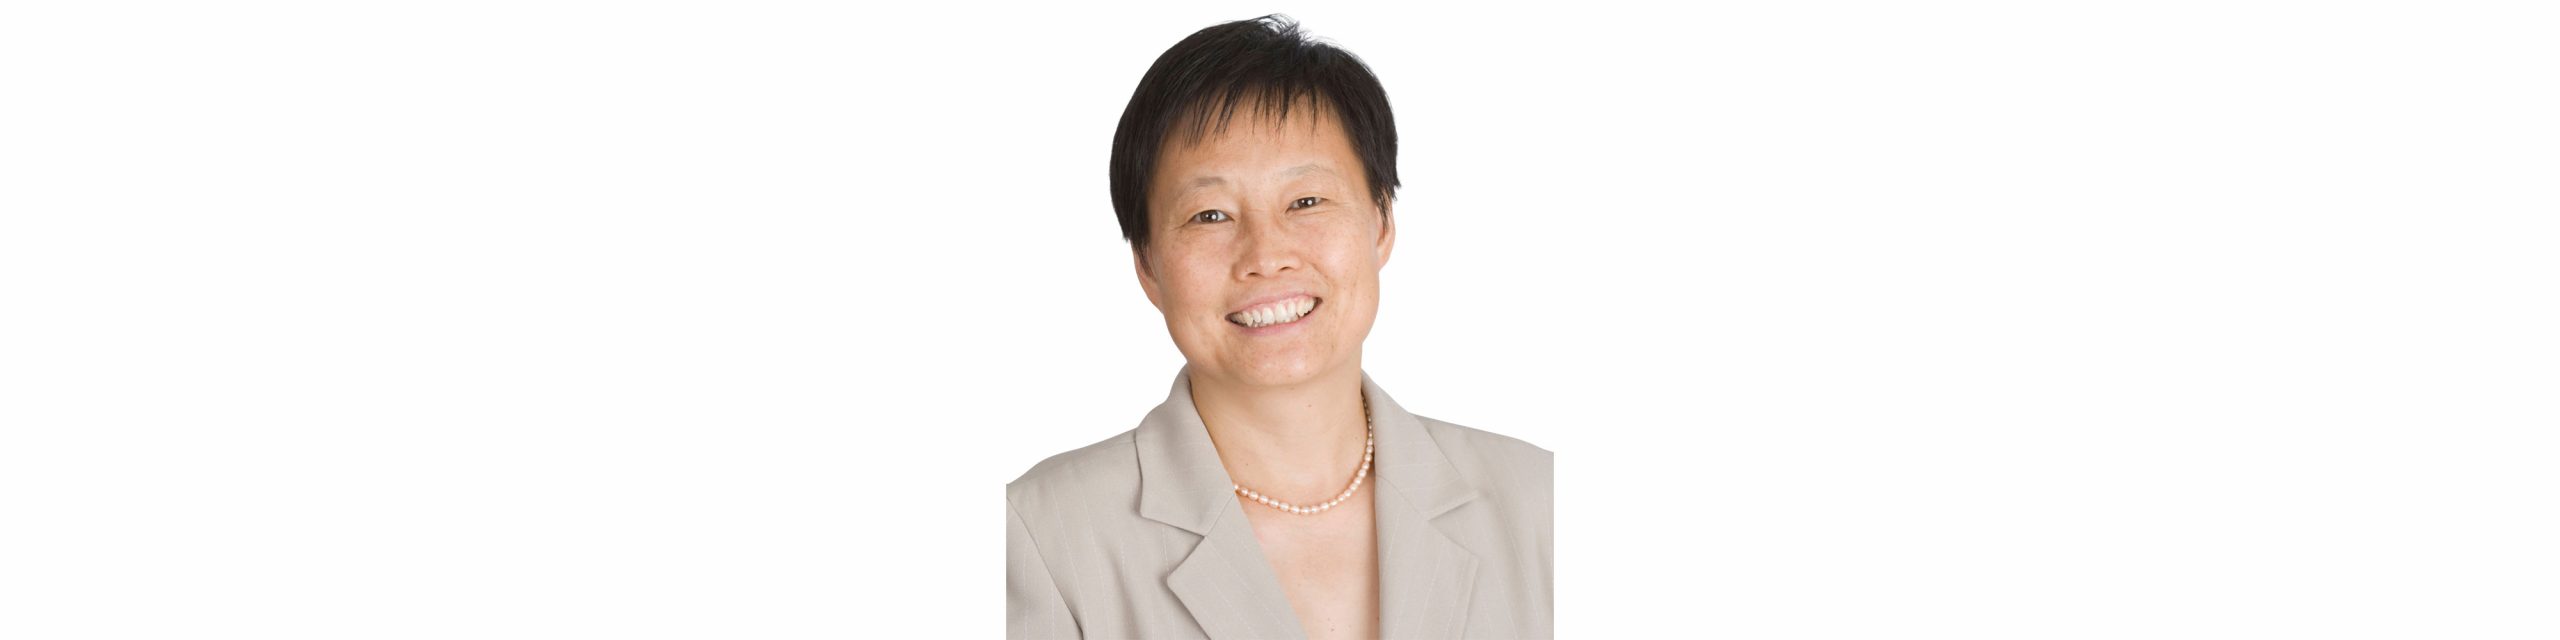 Photo of Professor Jinyan Li on white background.